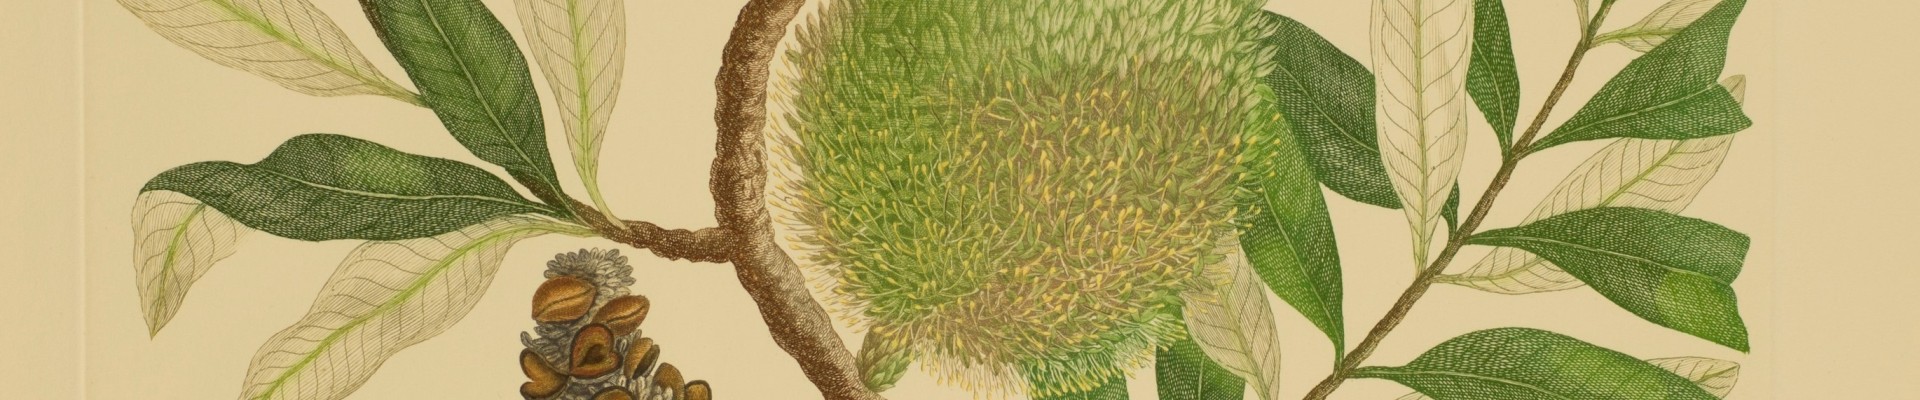 Banksia integrifolia Plate 284